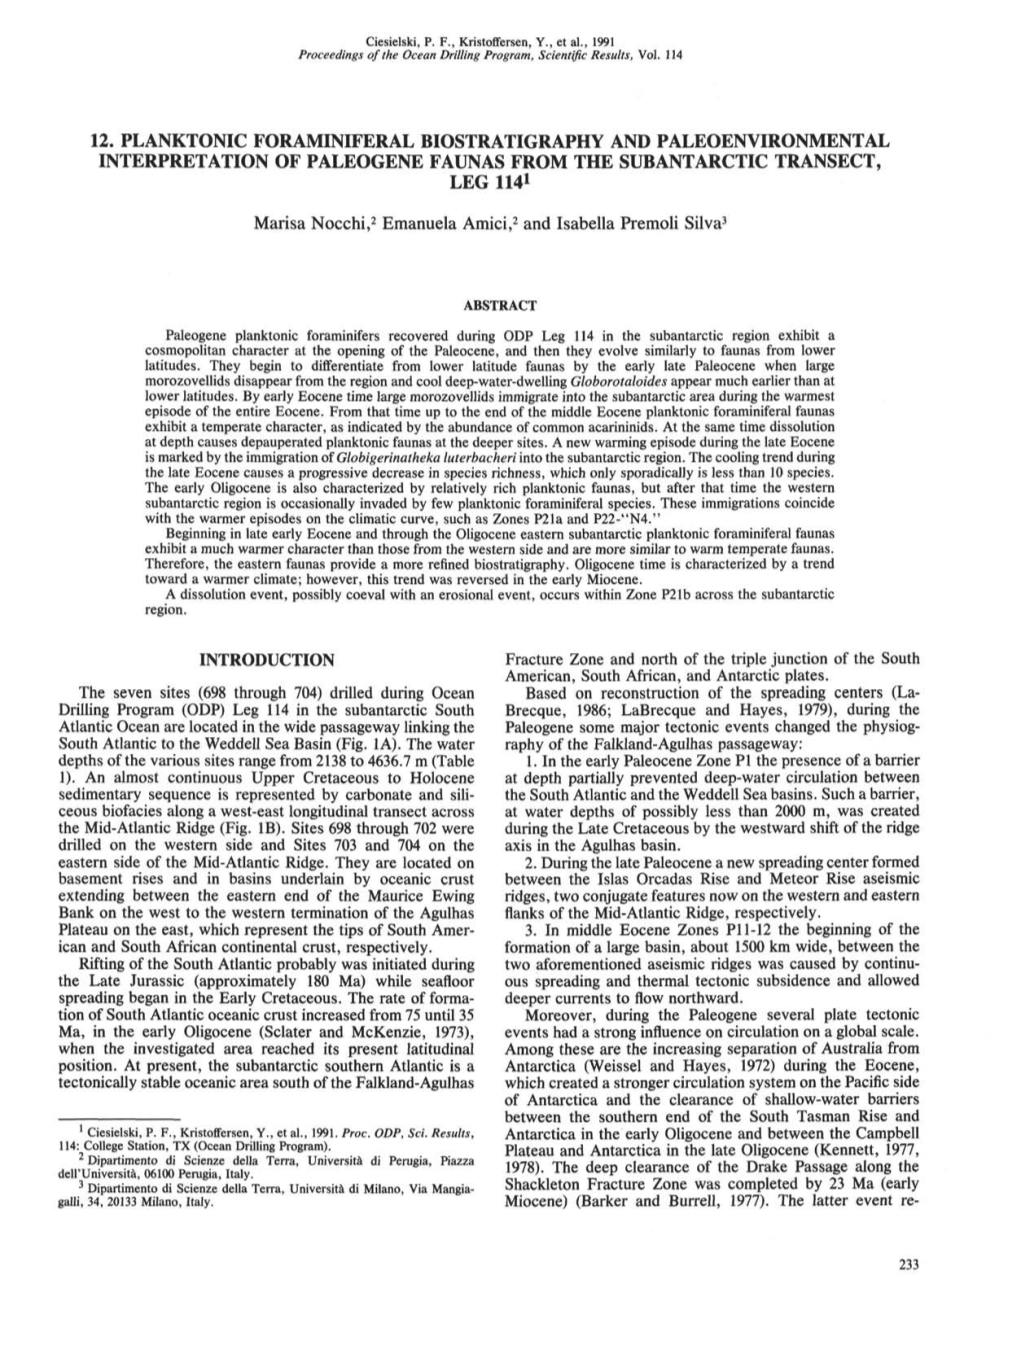 12. Planktonic Foraminiferal Biostratigraphy and Paleoenvironmental Interpretation of Paleogene Faunas from the Subantarctic Transect, Leg 1141